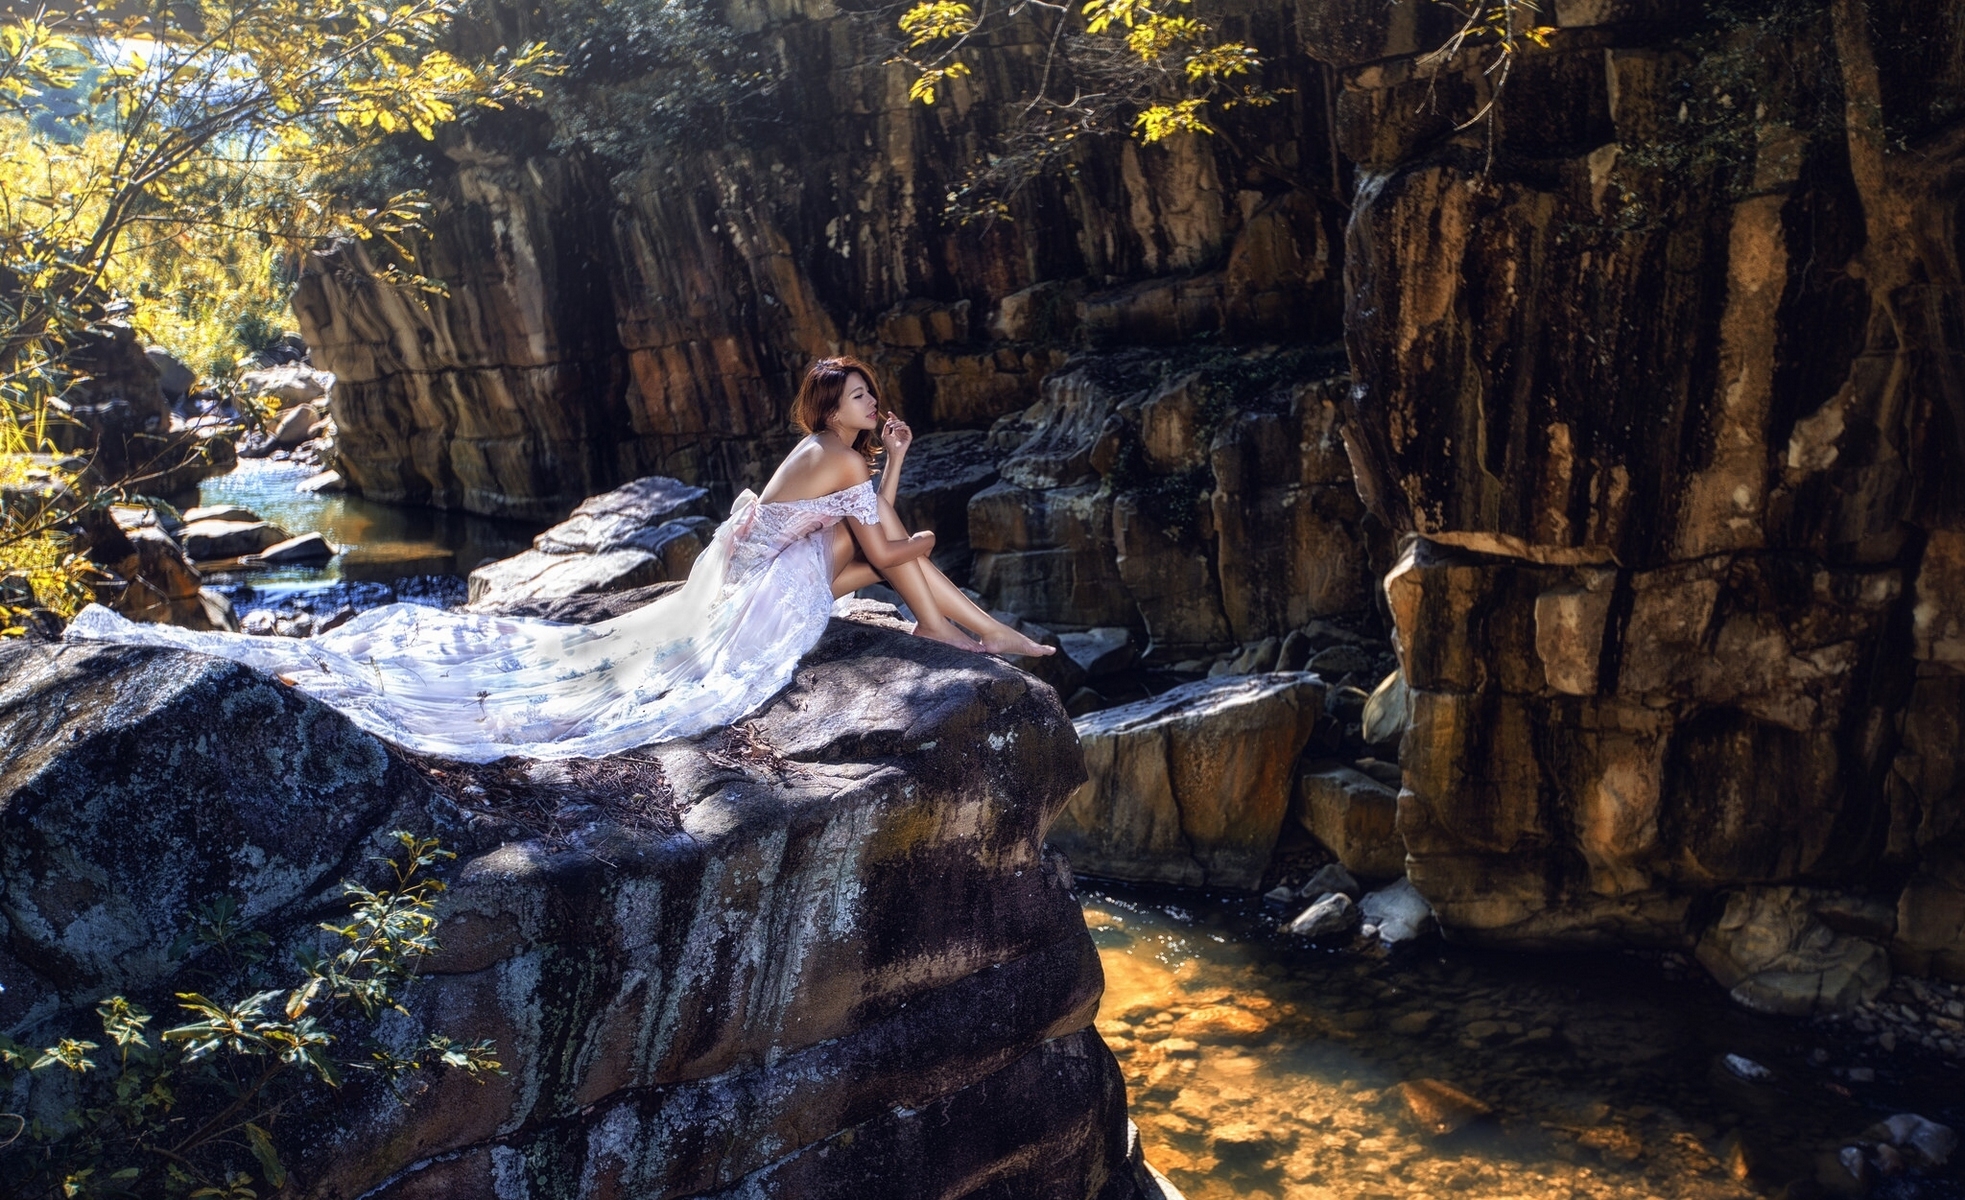 Фото с водопадом и девушкой